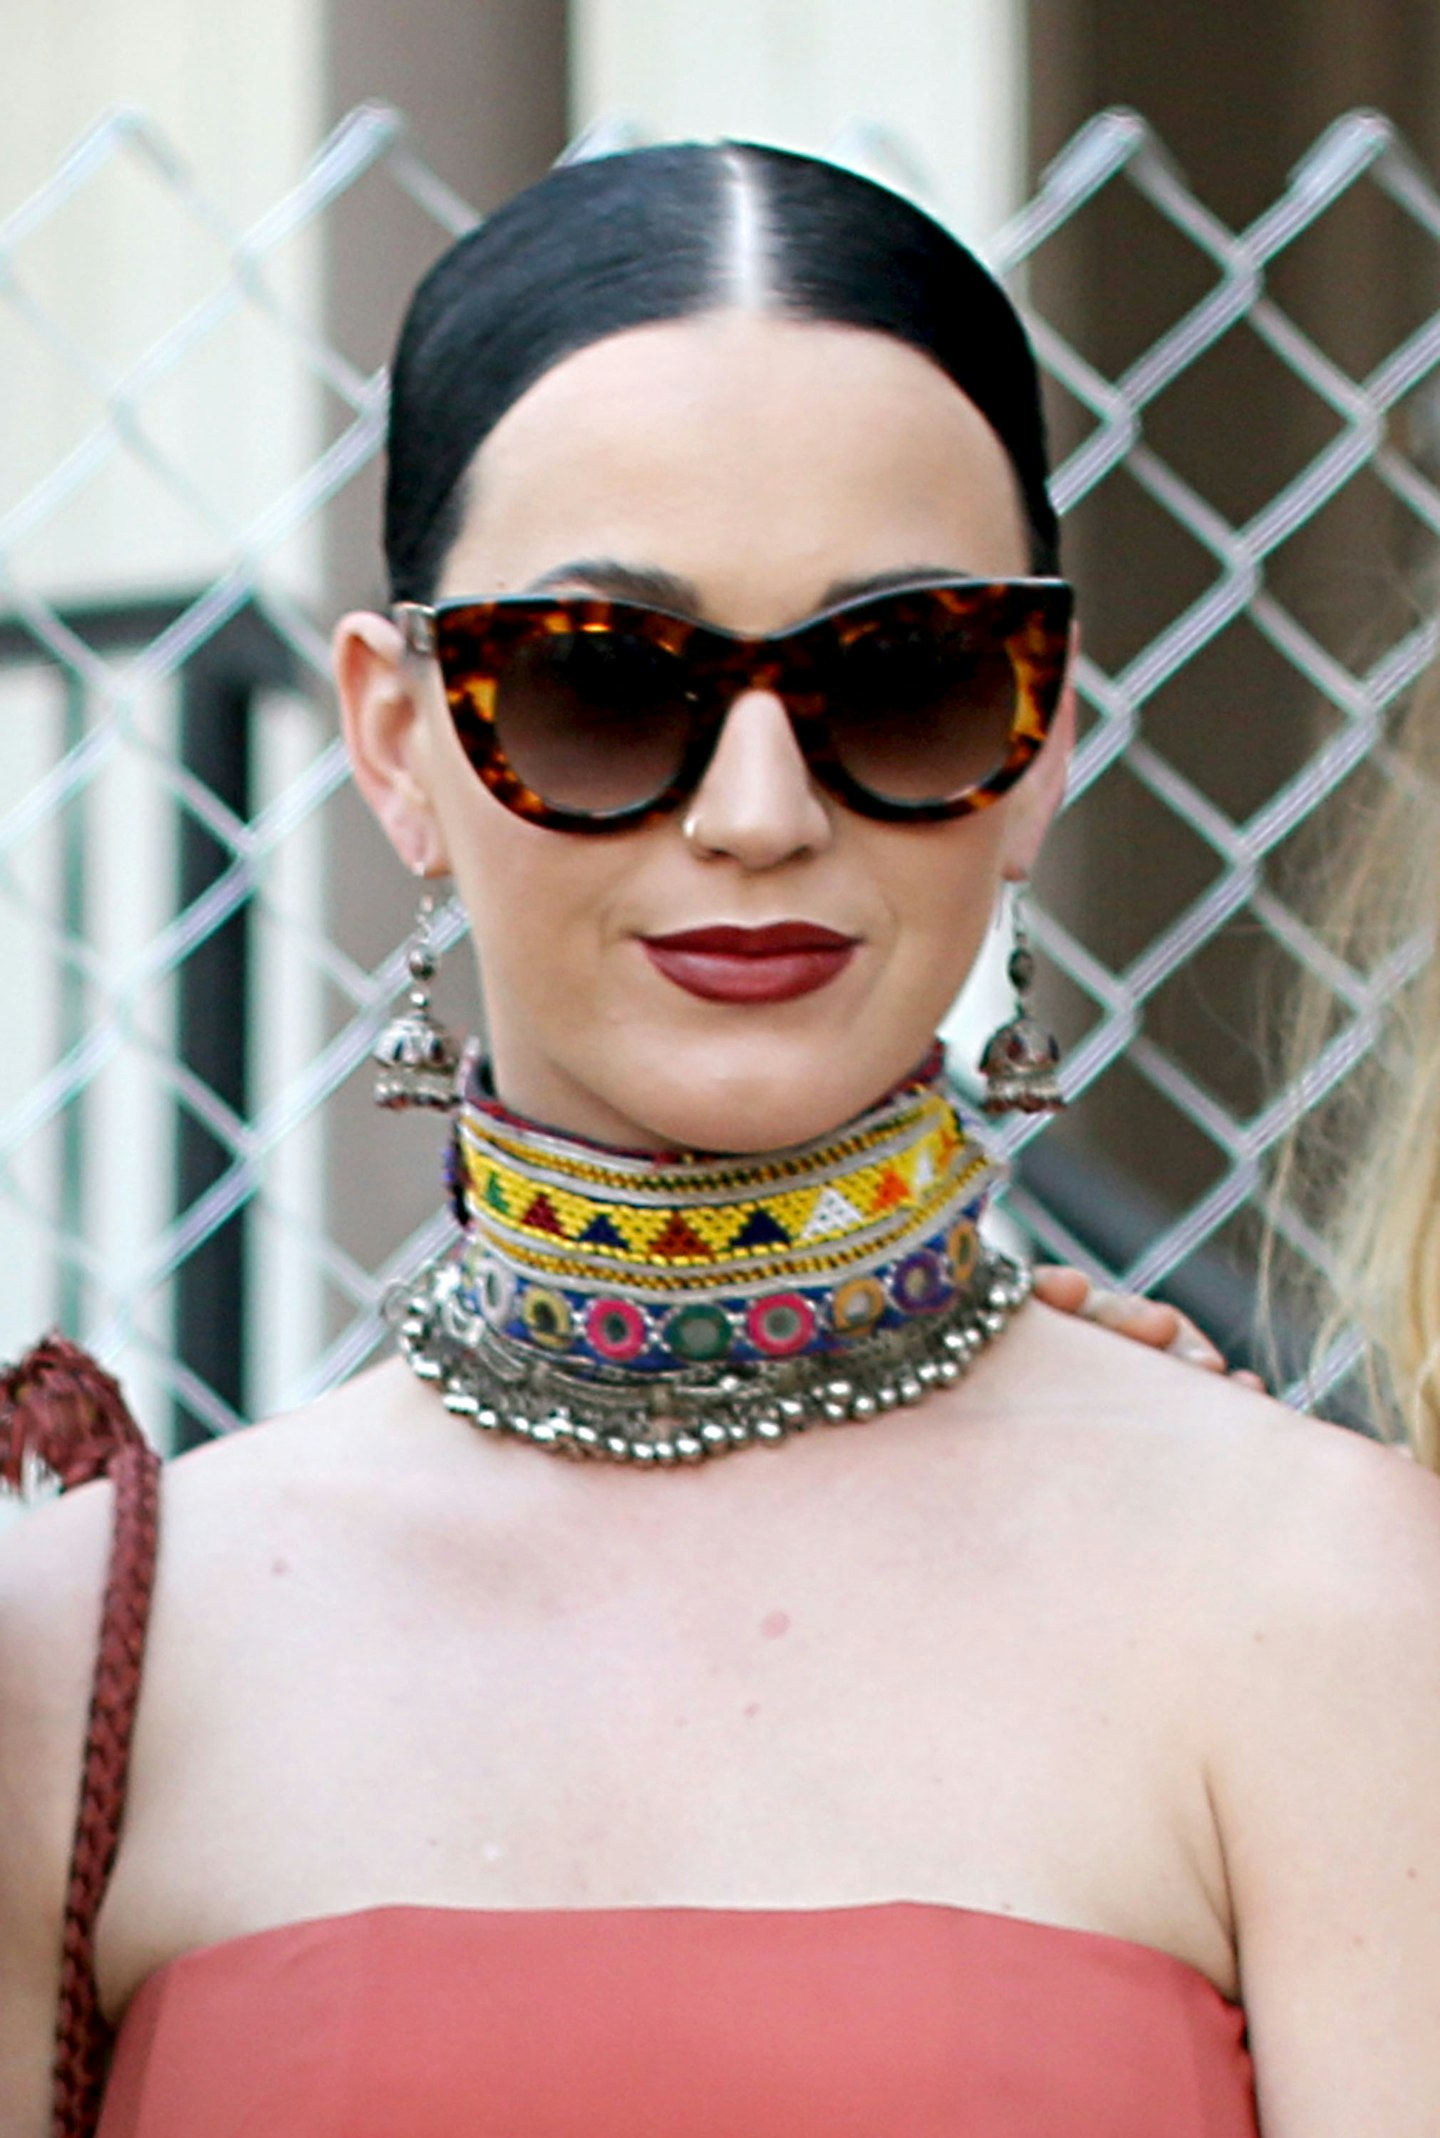 Katy Perry at Coachella 2015